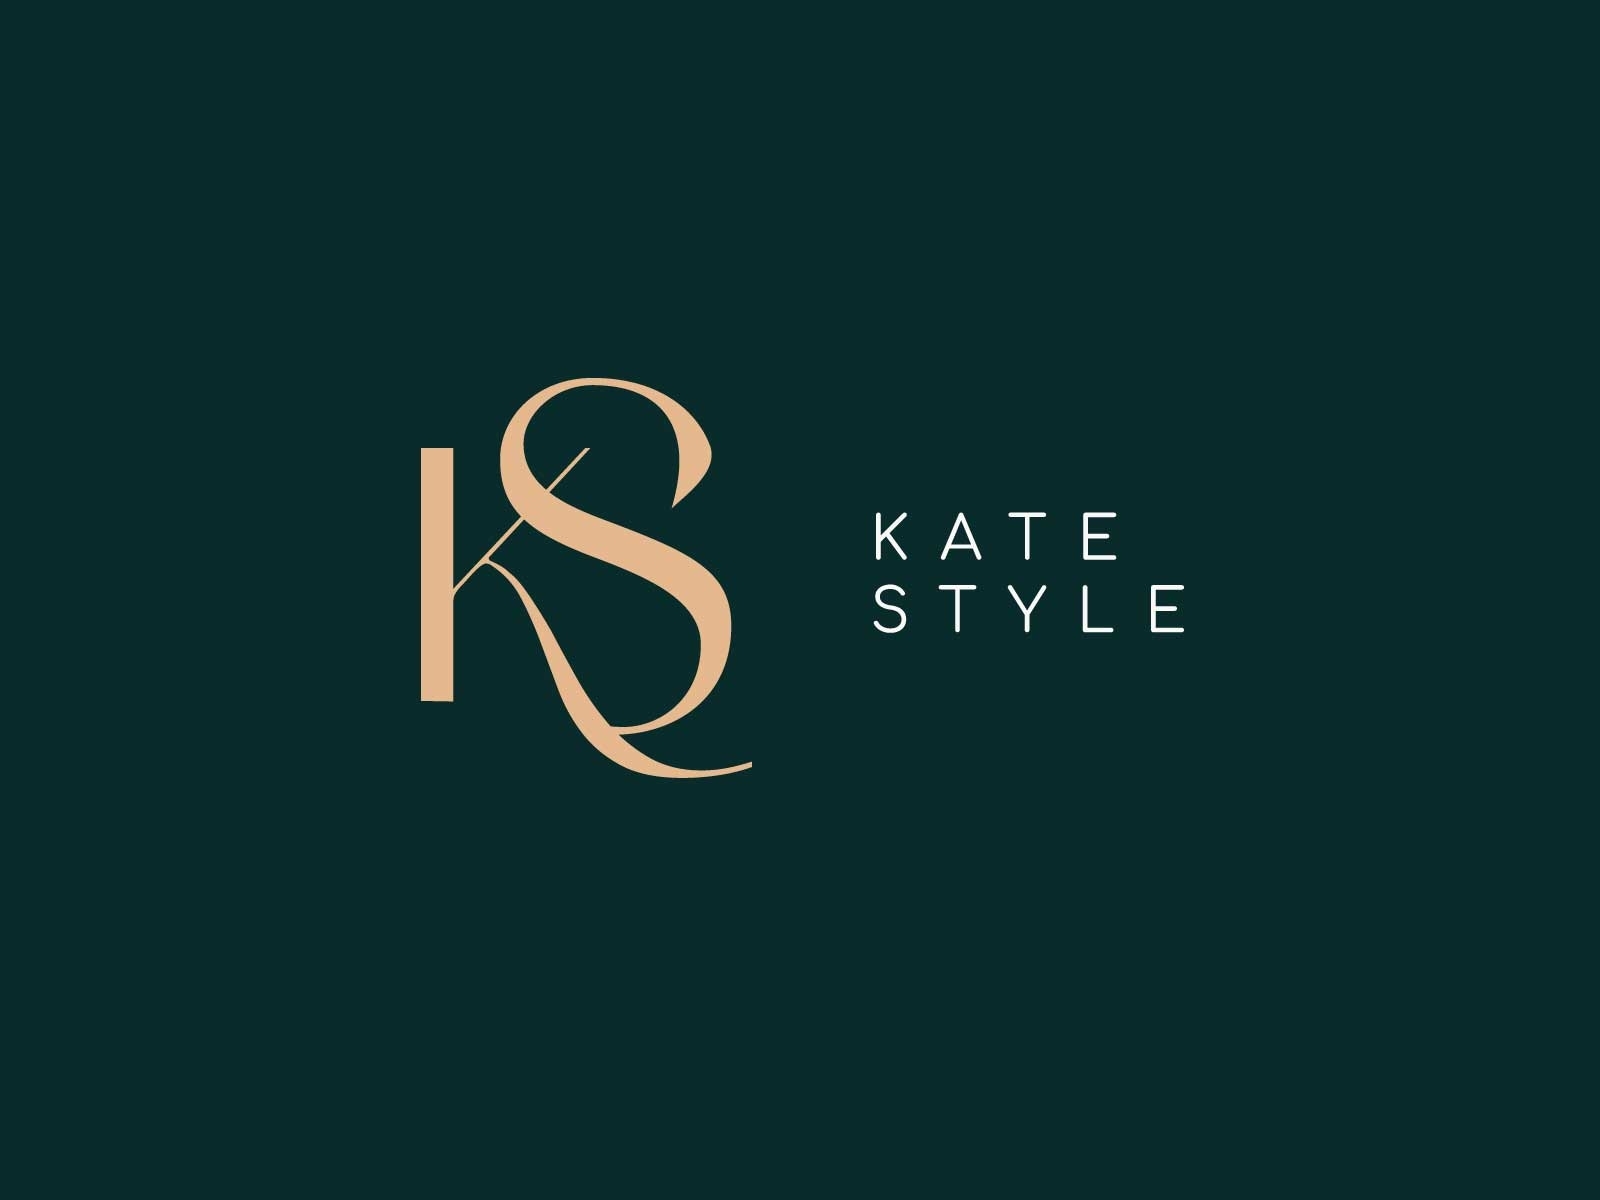 KATE STYLE Fashion logo by lima sultana on Dribbble